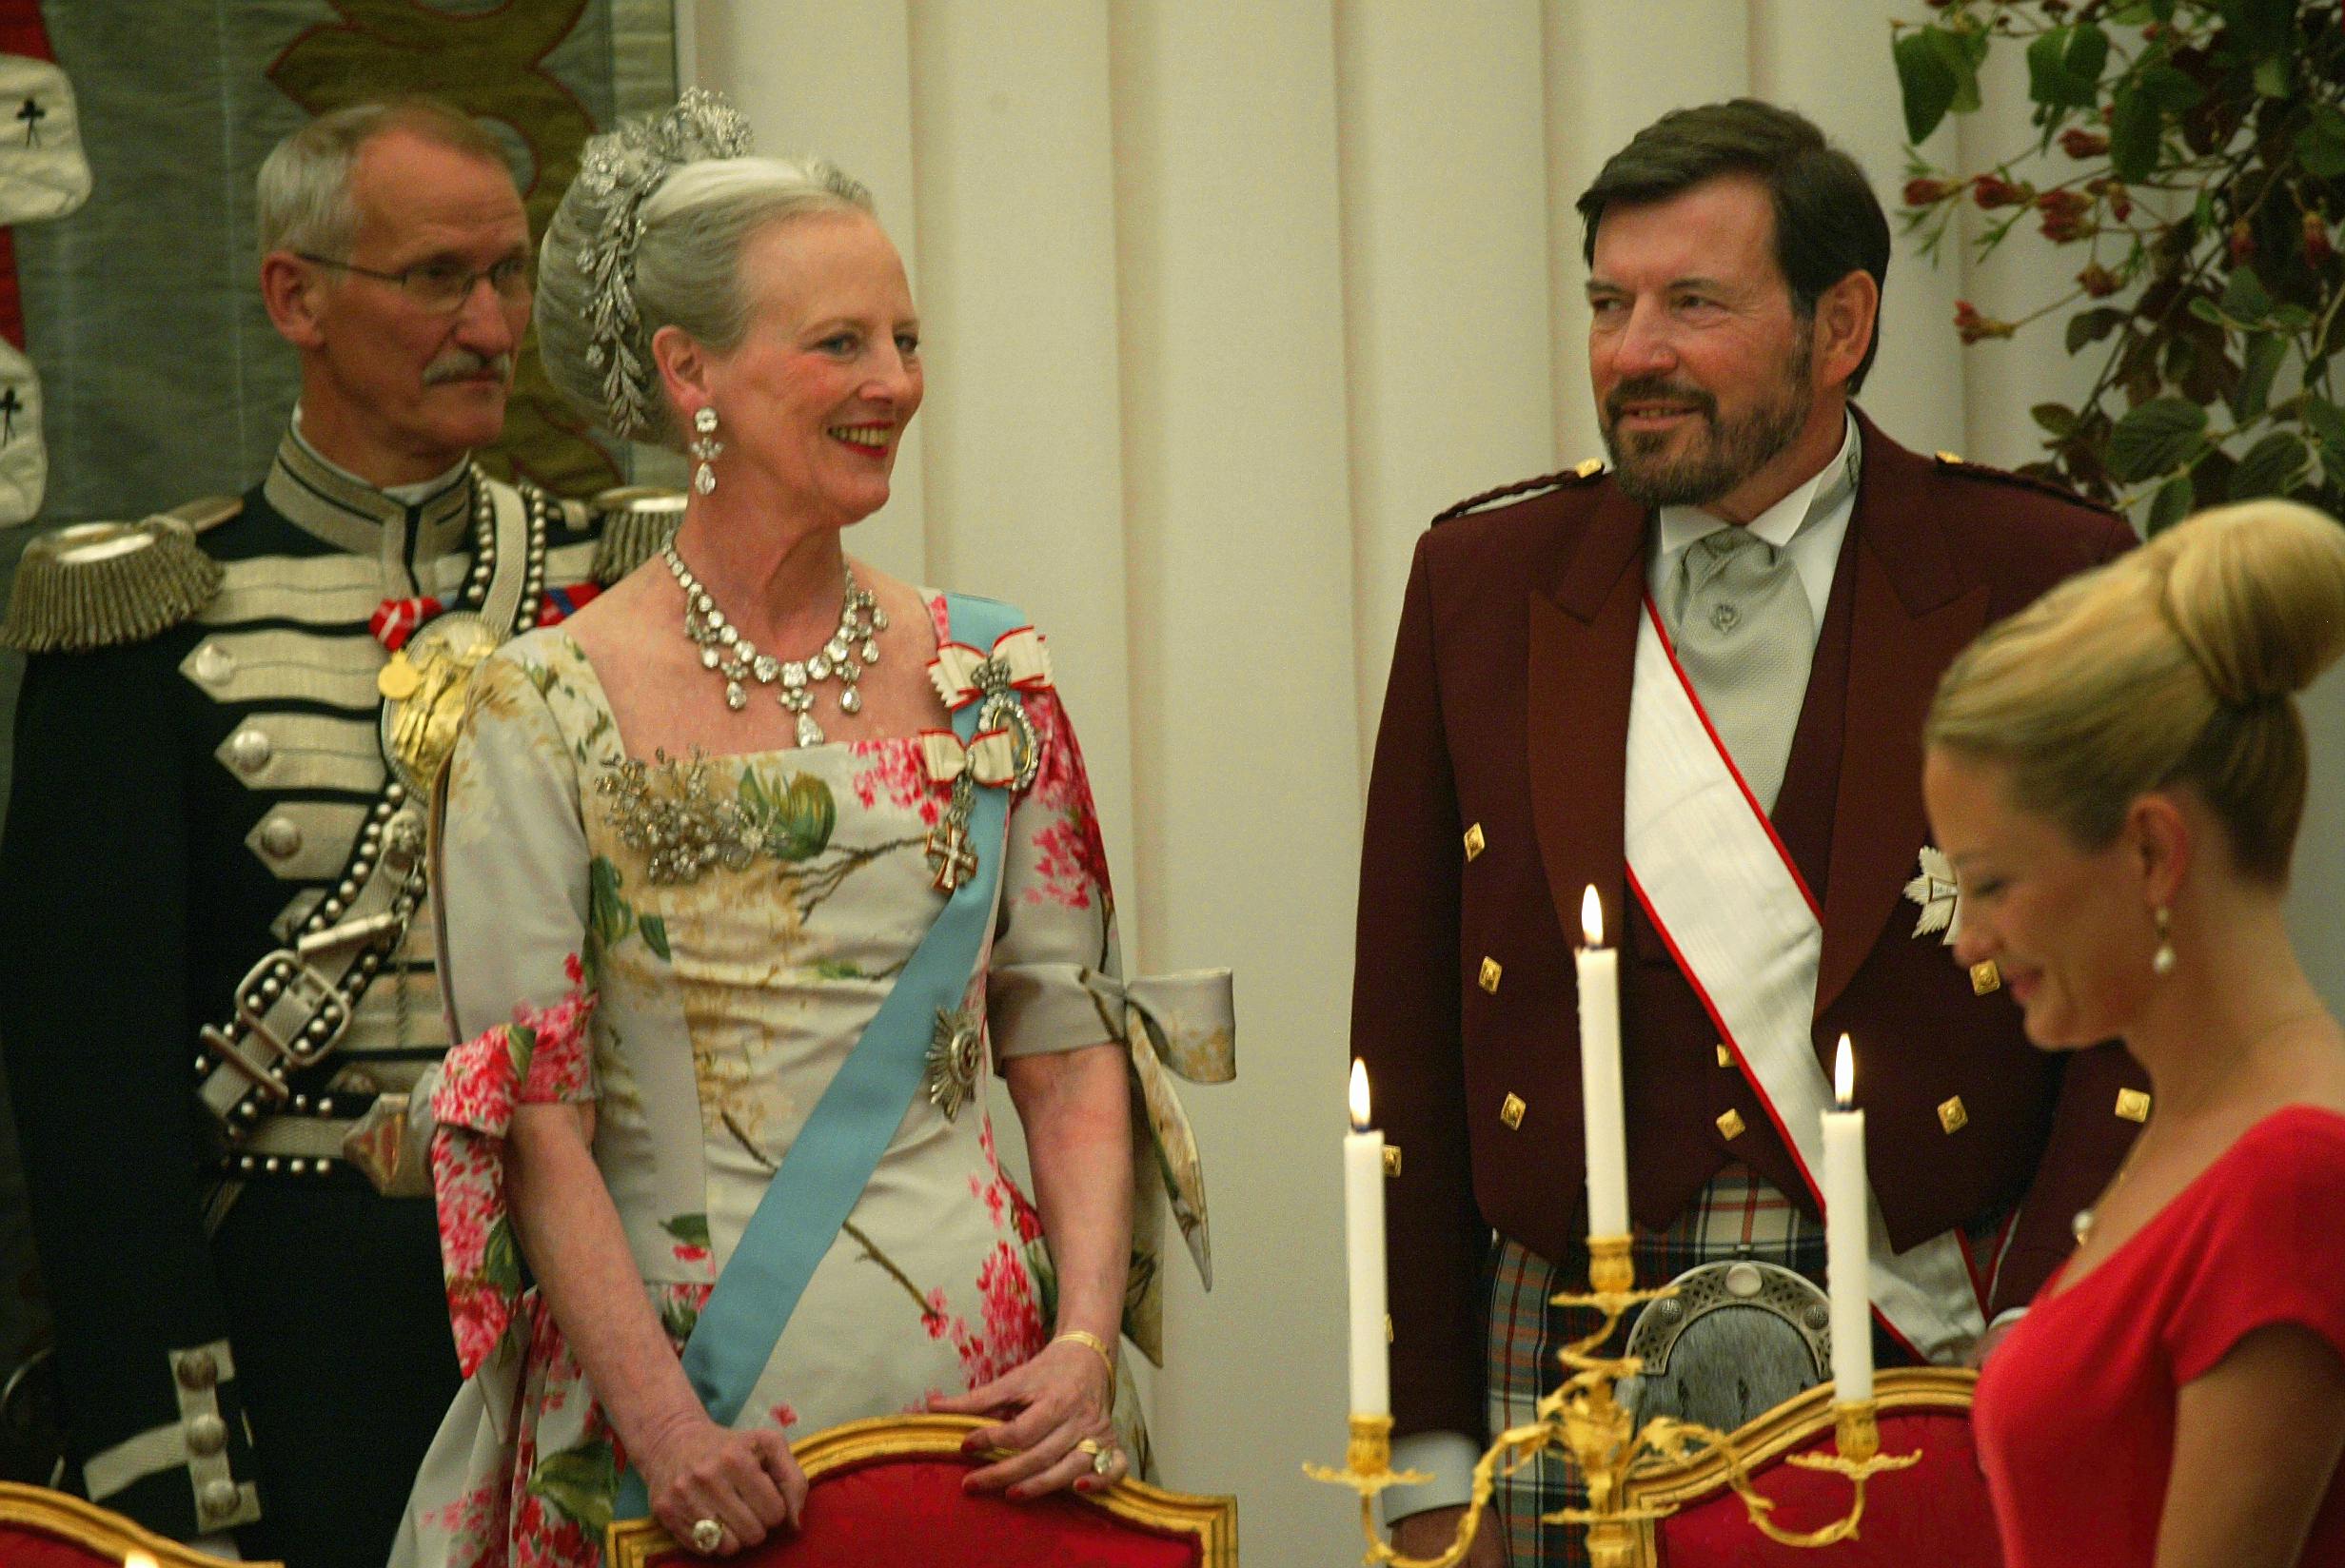 Bryllup: Kronprins Frederik og Mary Donaldson bliver gift den 14. maj 2004 - bryllupsmiddag på Fredensborg Slot Dronning Margrethe og John Donaldson